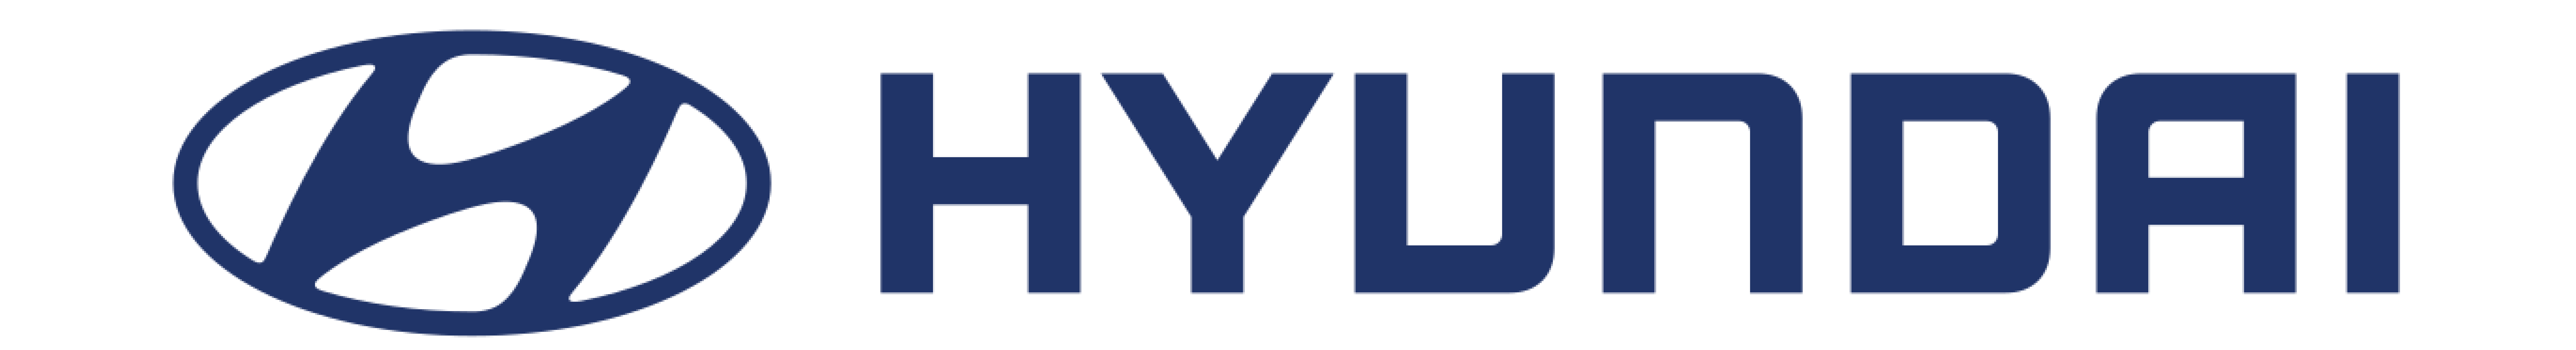 Hyundai Motor Group logo